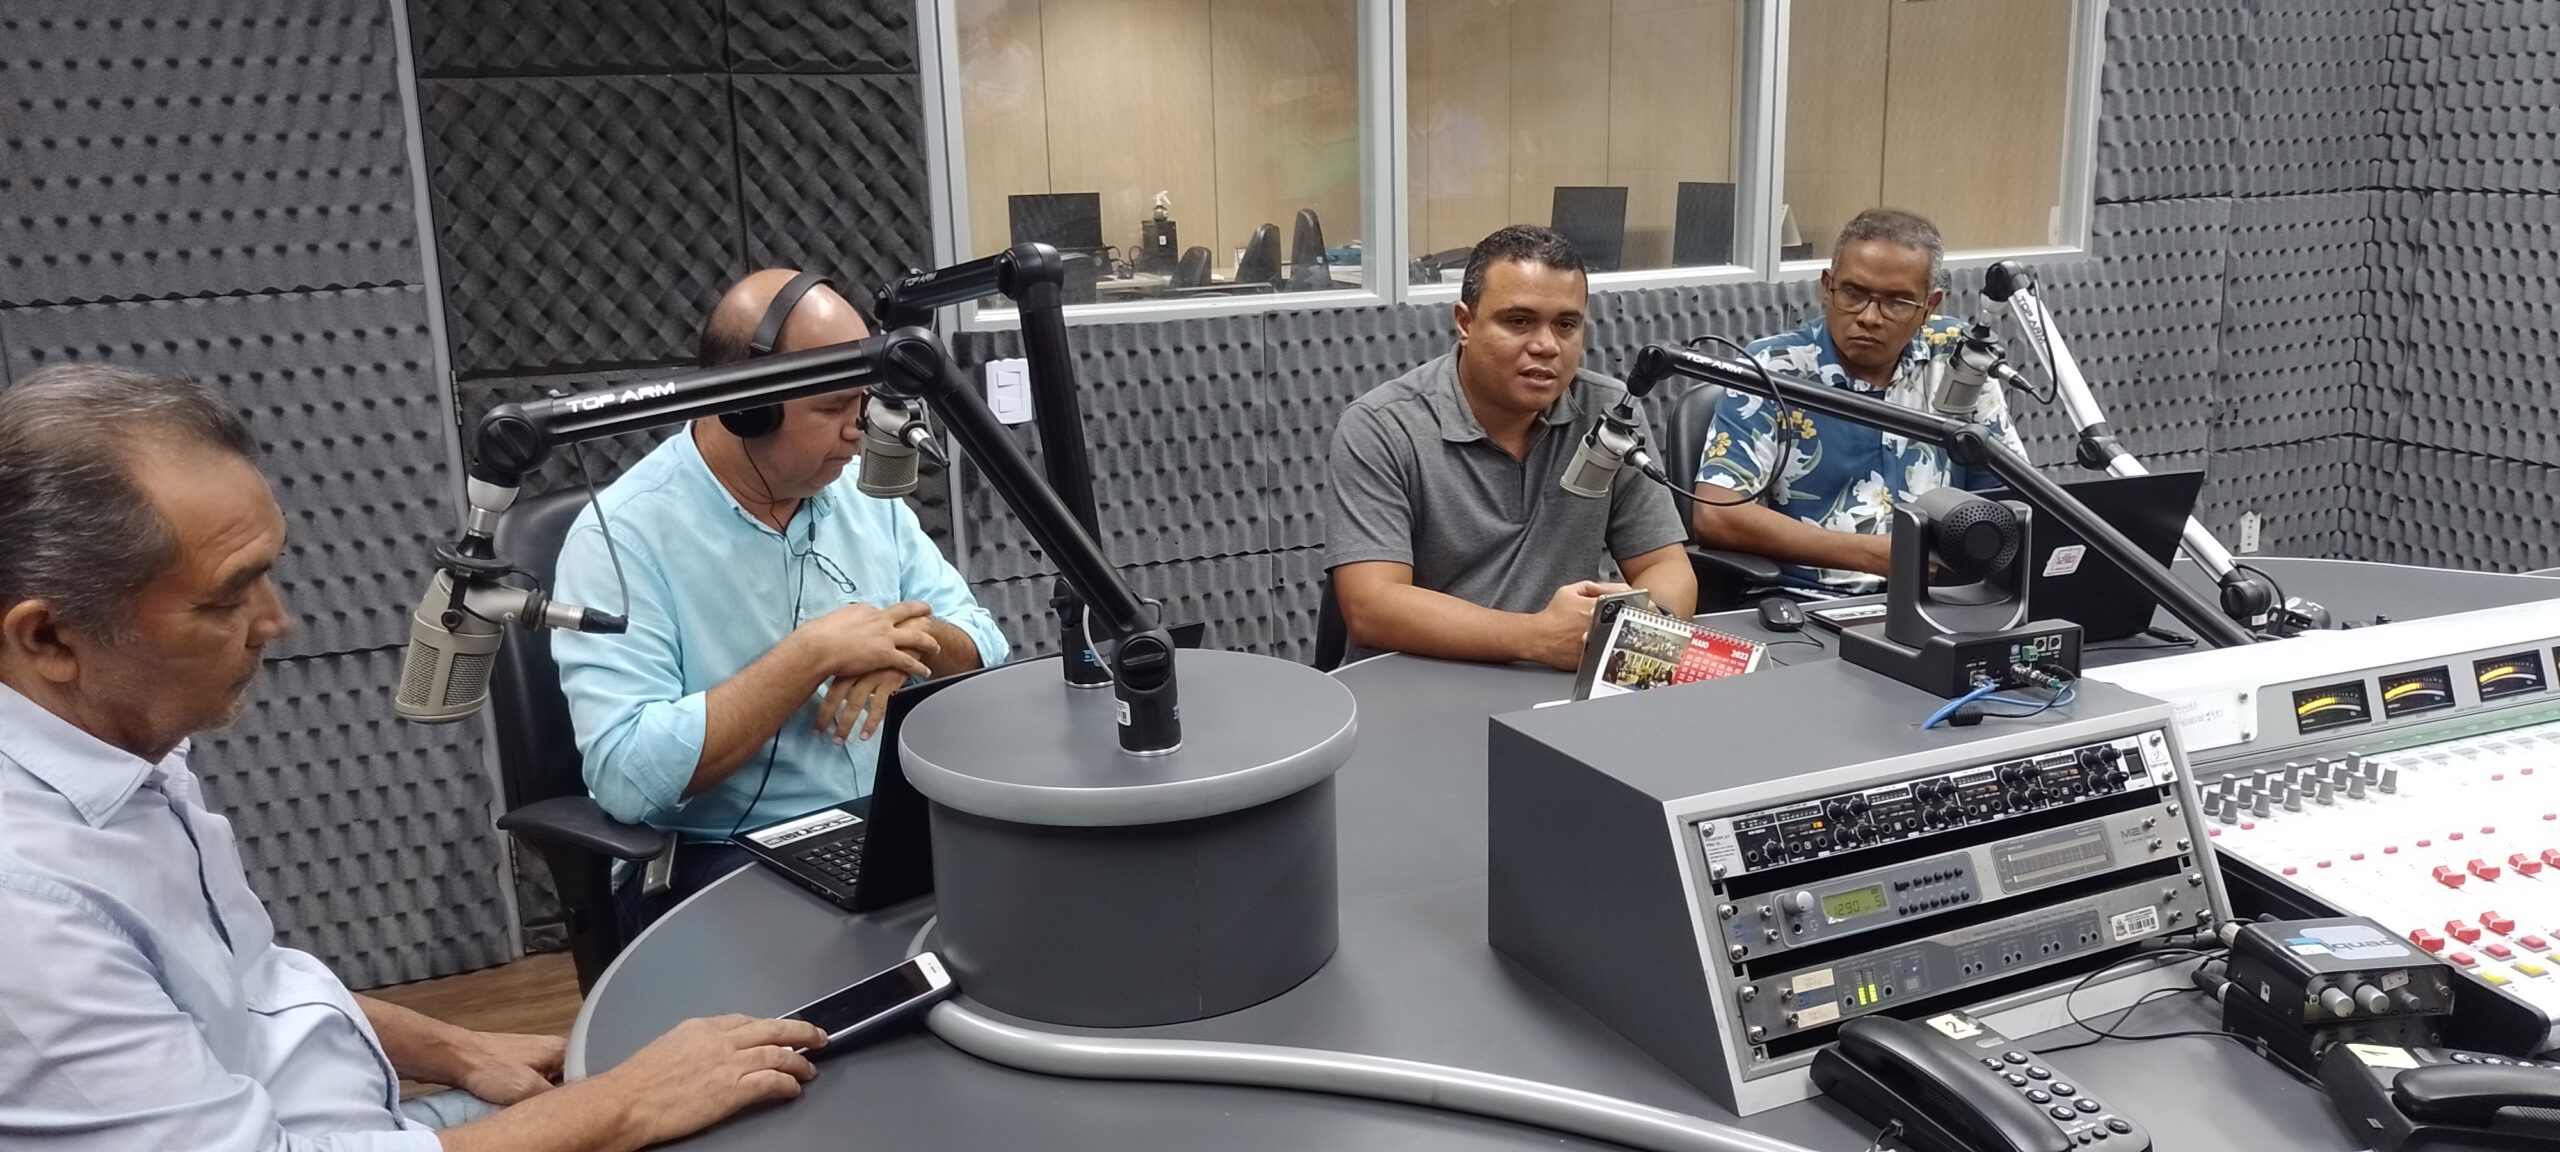 O Prefeito Luis Fernando concedeu entrevista para a Rádio Timbira, de São Luís; Confira na integra